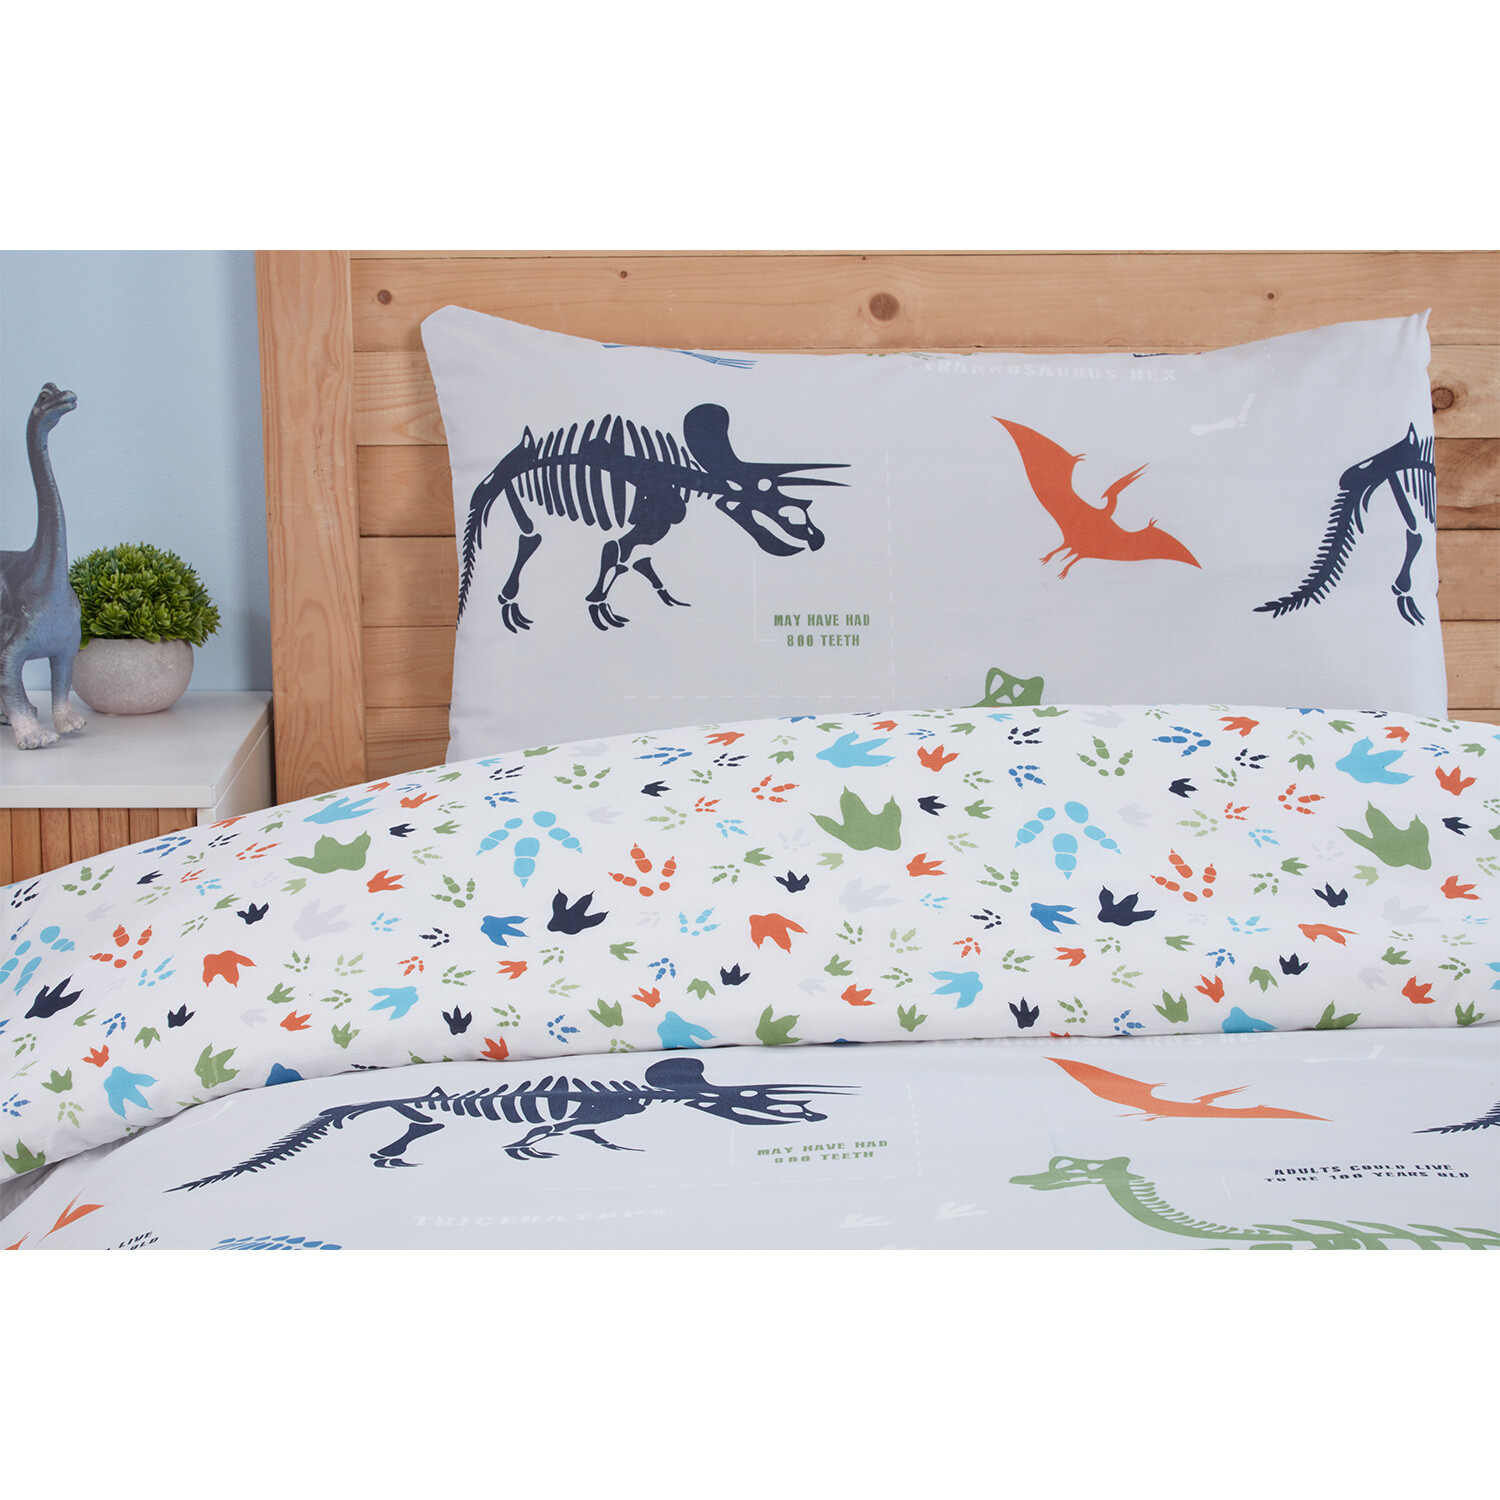 Dinosaur Duvet Cover and Pillowcase Set - Grey Image 3